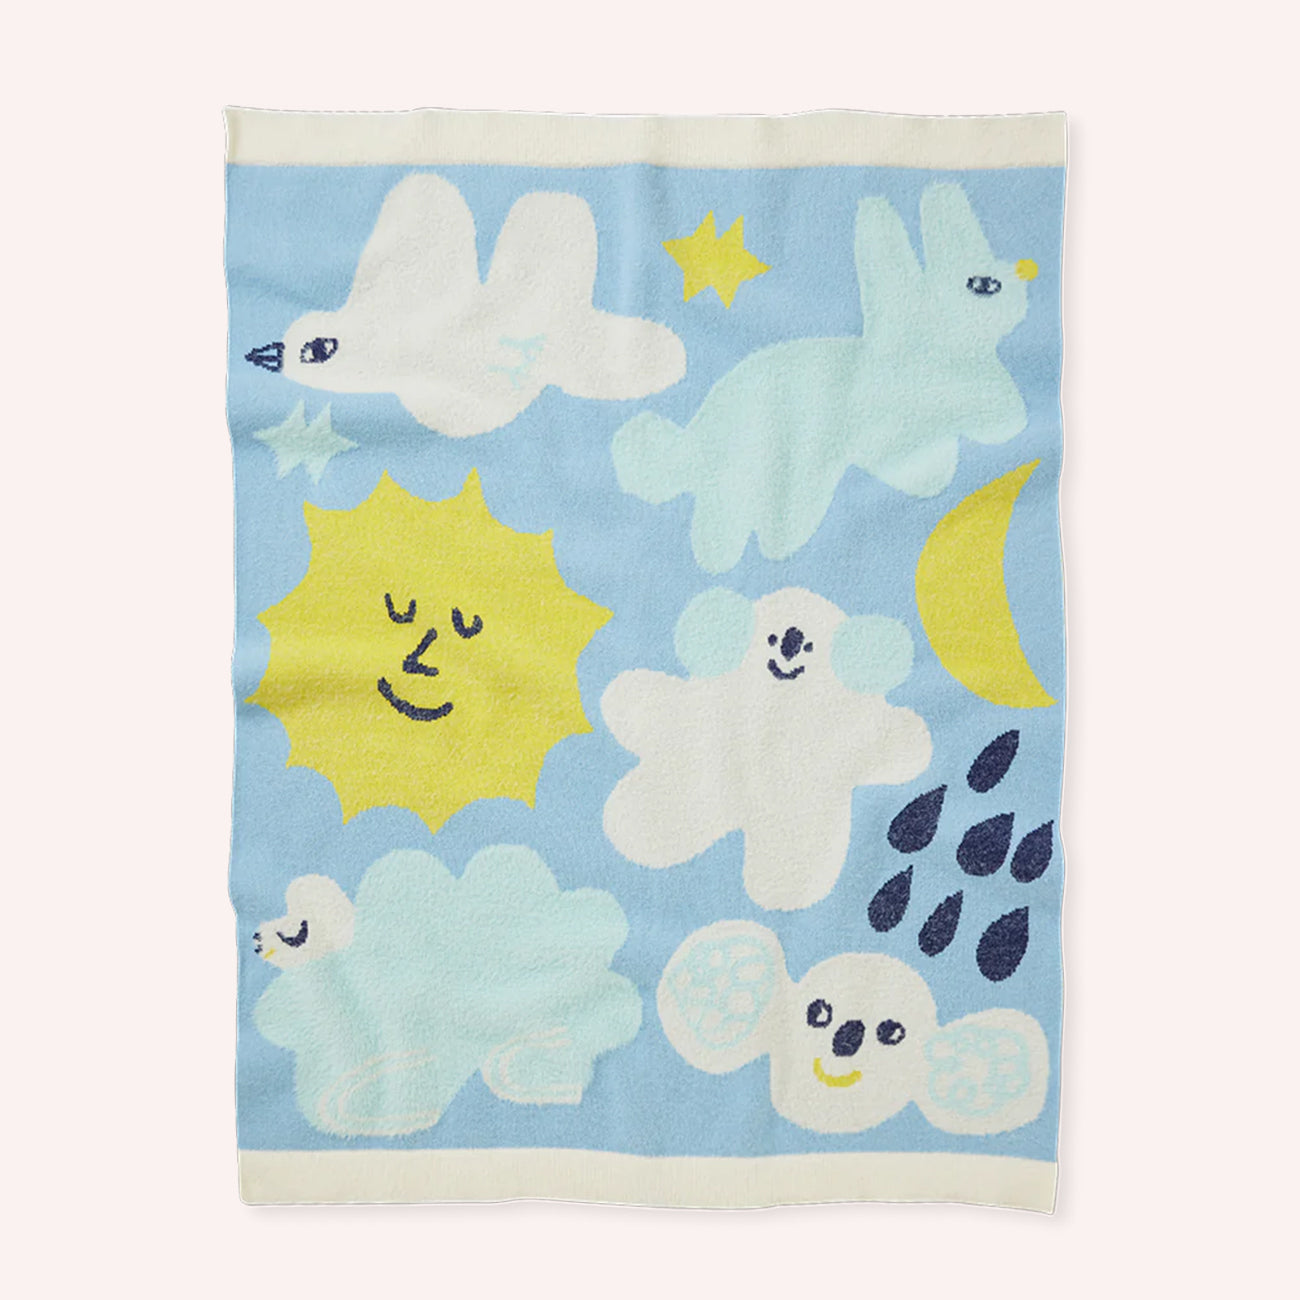 Fluffy Knit Blanket - I Spy In The Sky